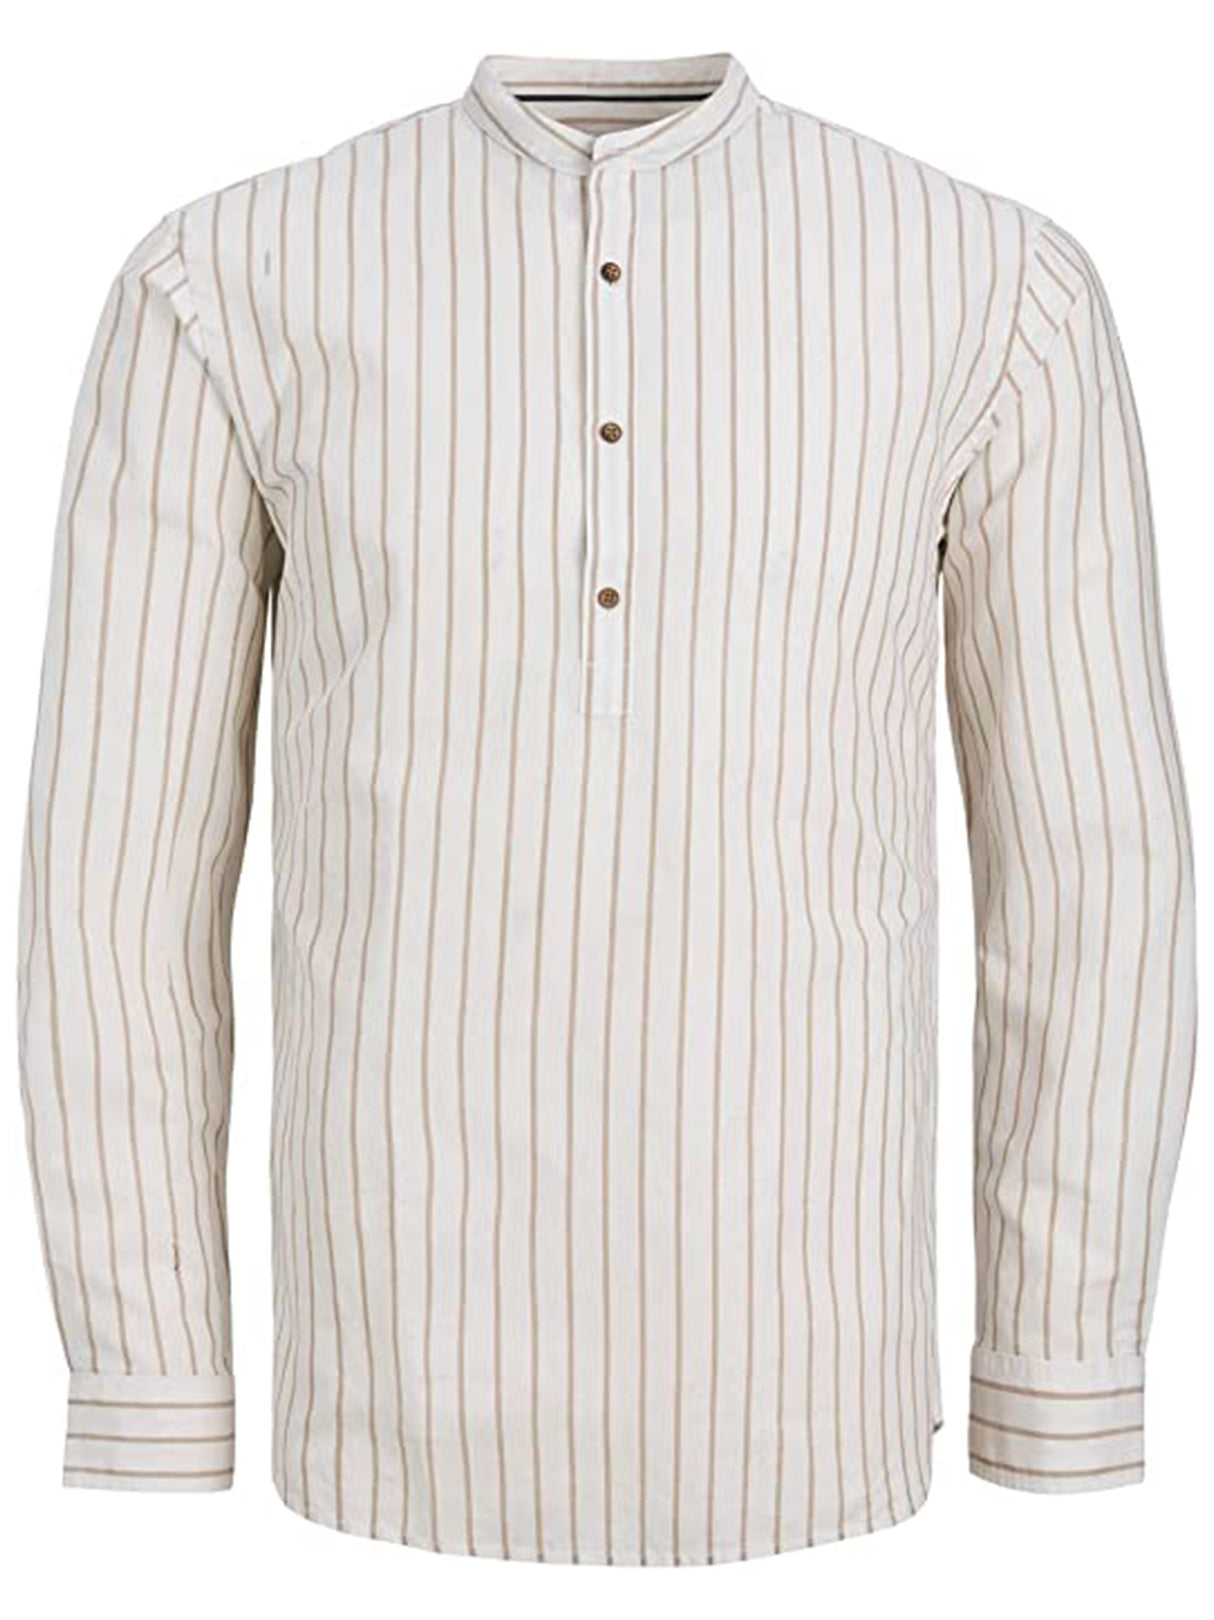 Image for Men's Striped Henley Shirt,Beige